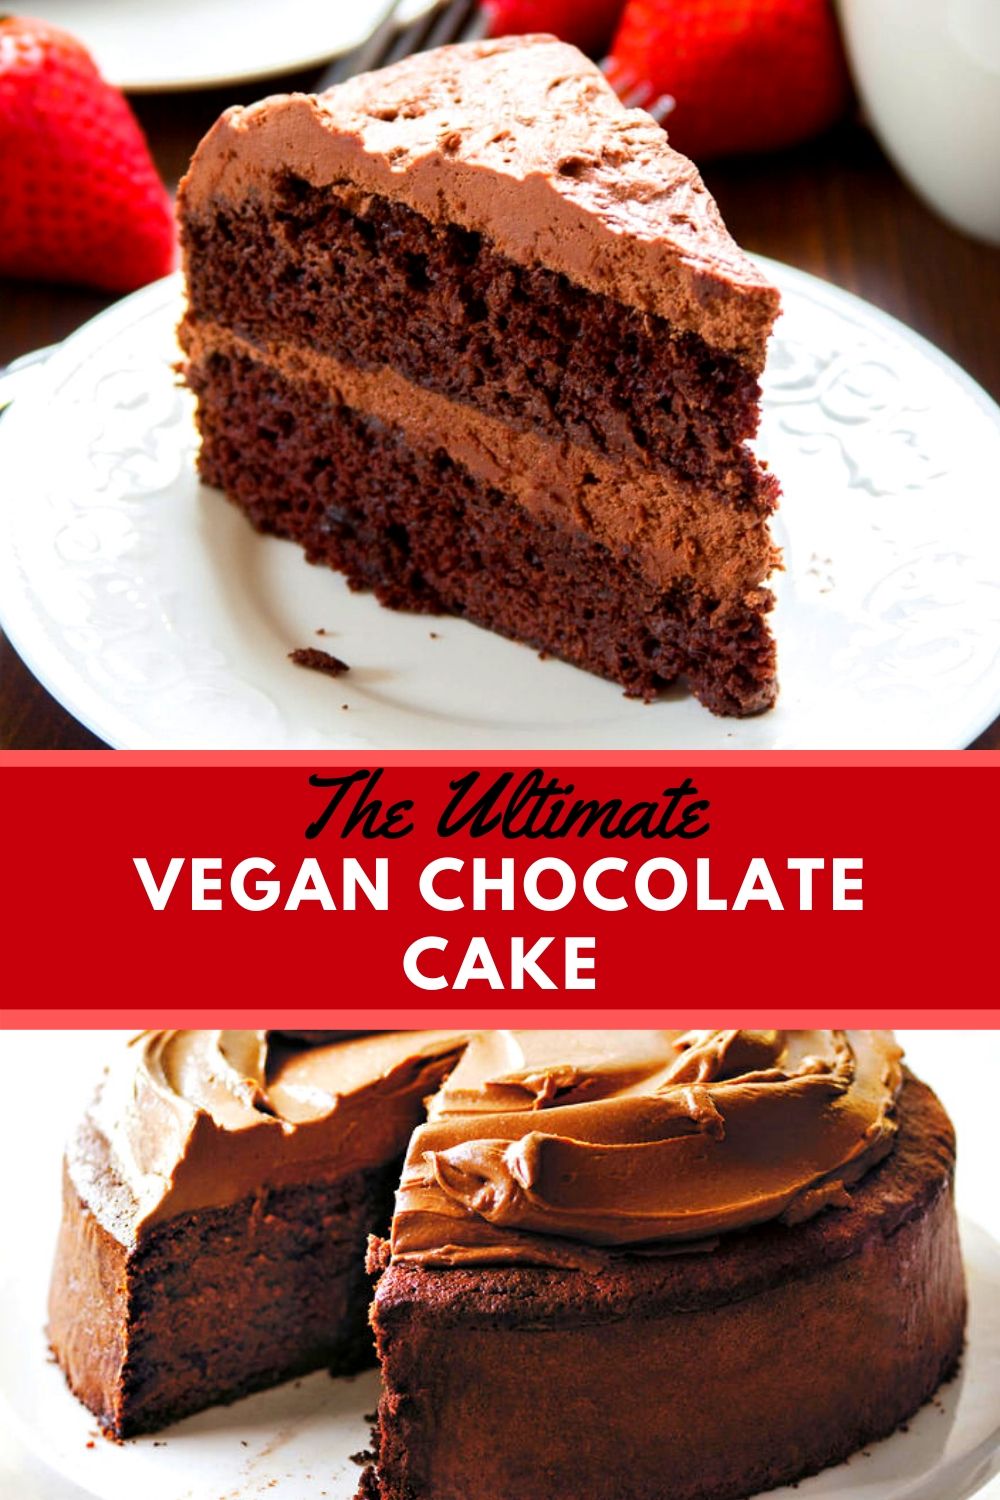 The Ultimate Vegan Chocolate Cake